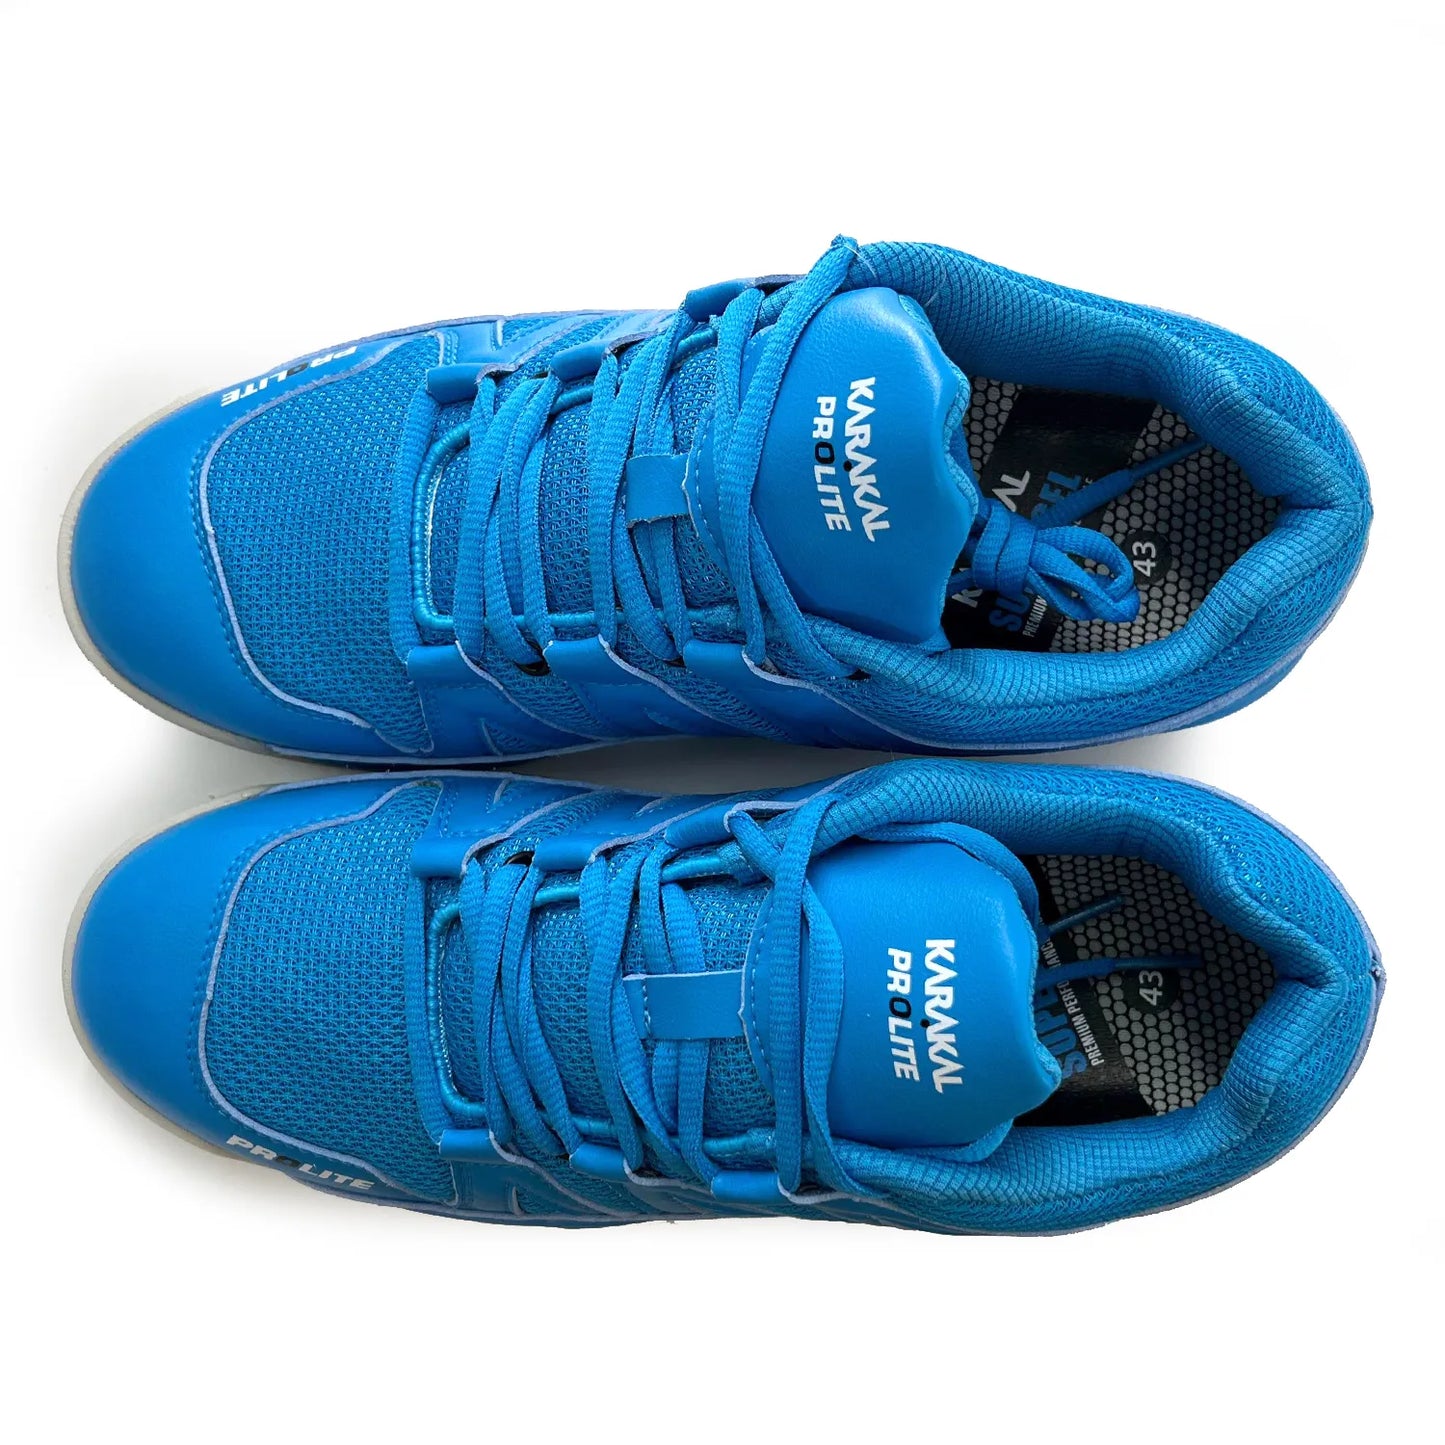 Karakal ProLite Court Shoe in Blue